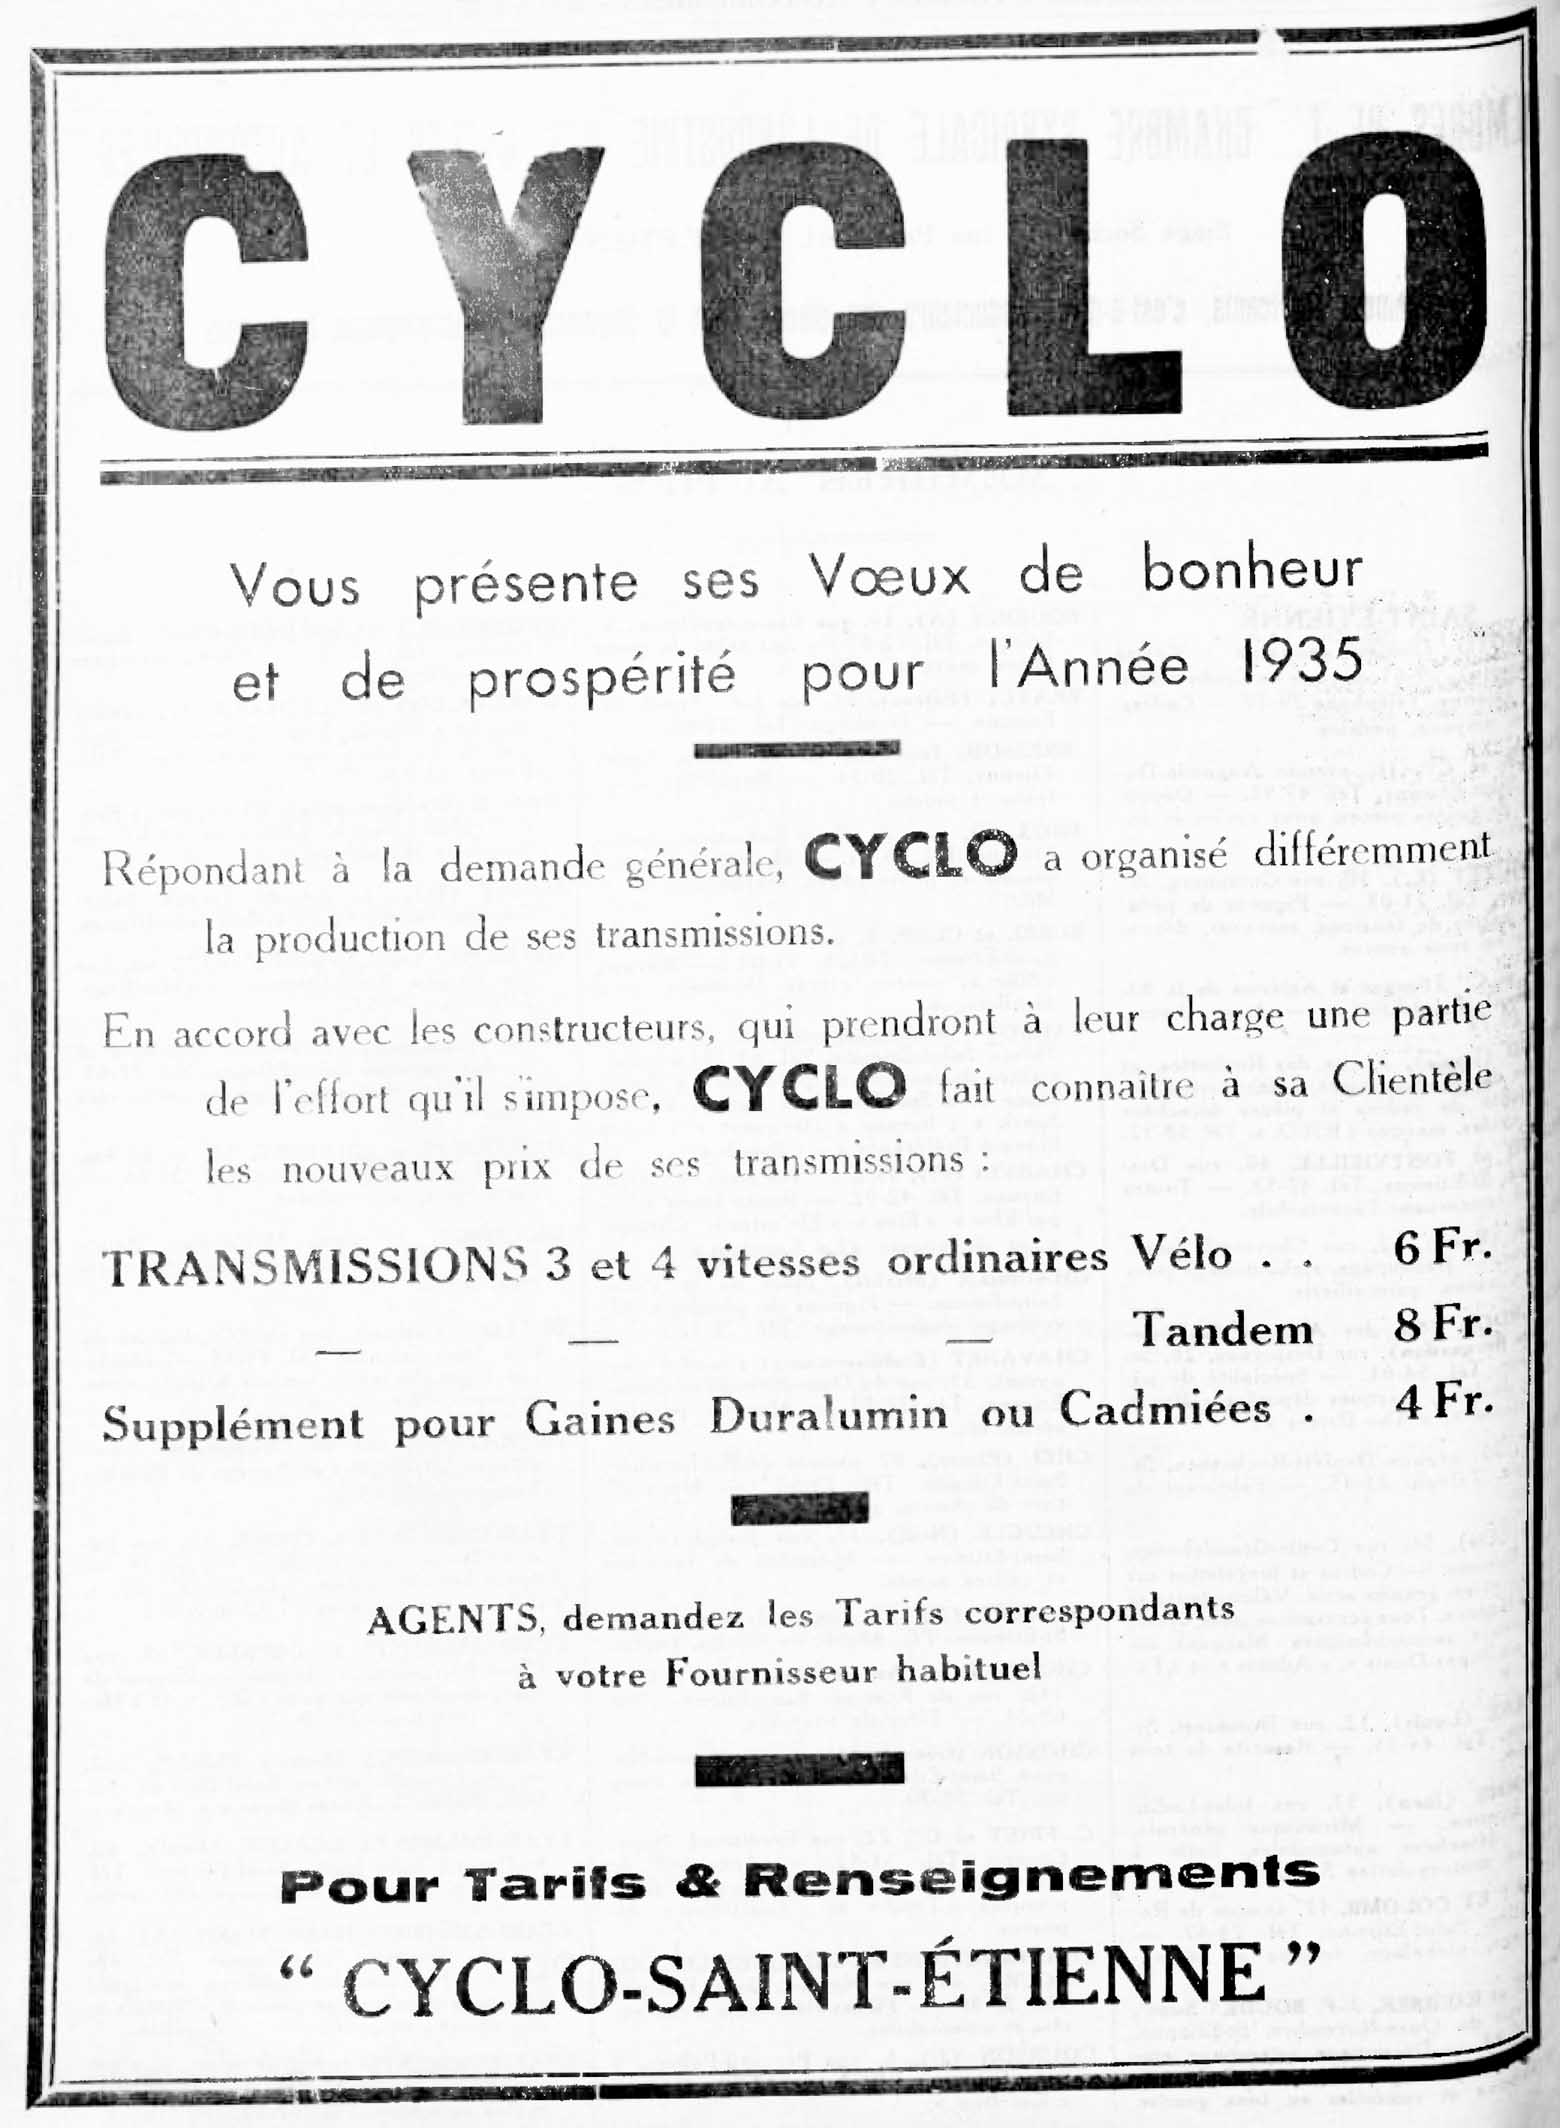 L'Industrie des Cycles et Automobiles January 1935 - Cyclo advert main image